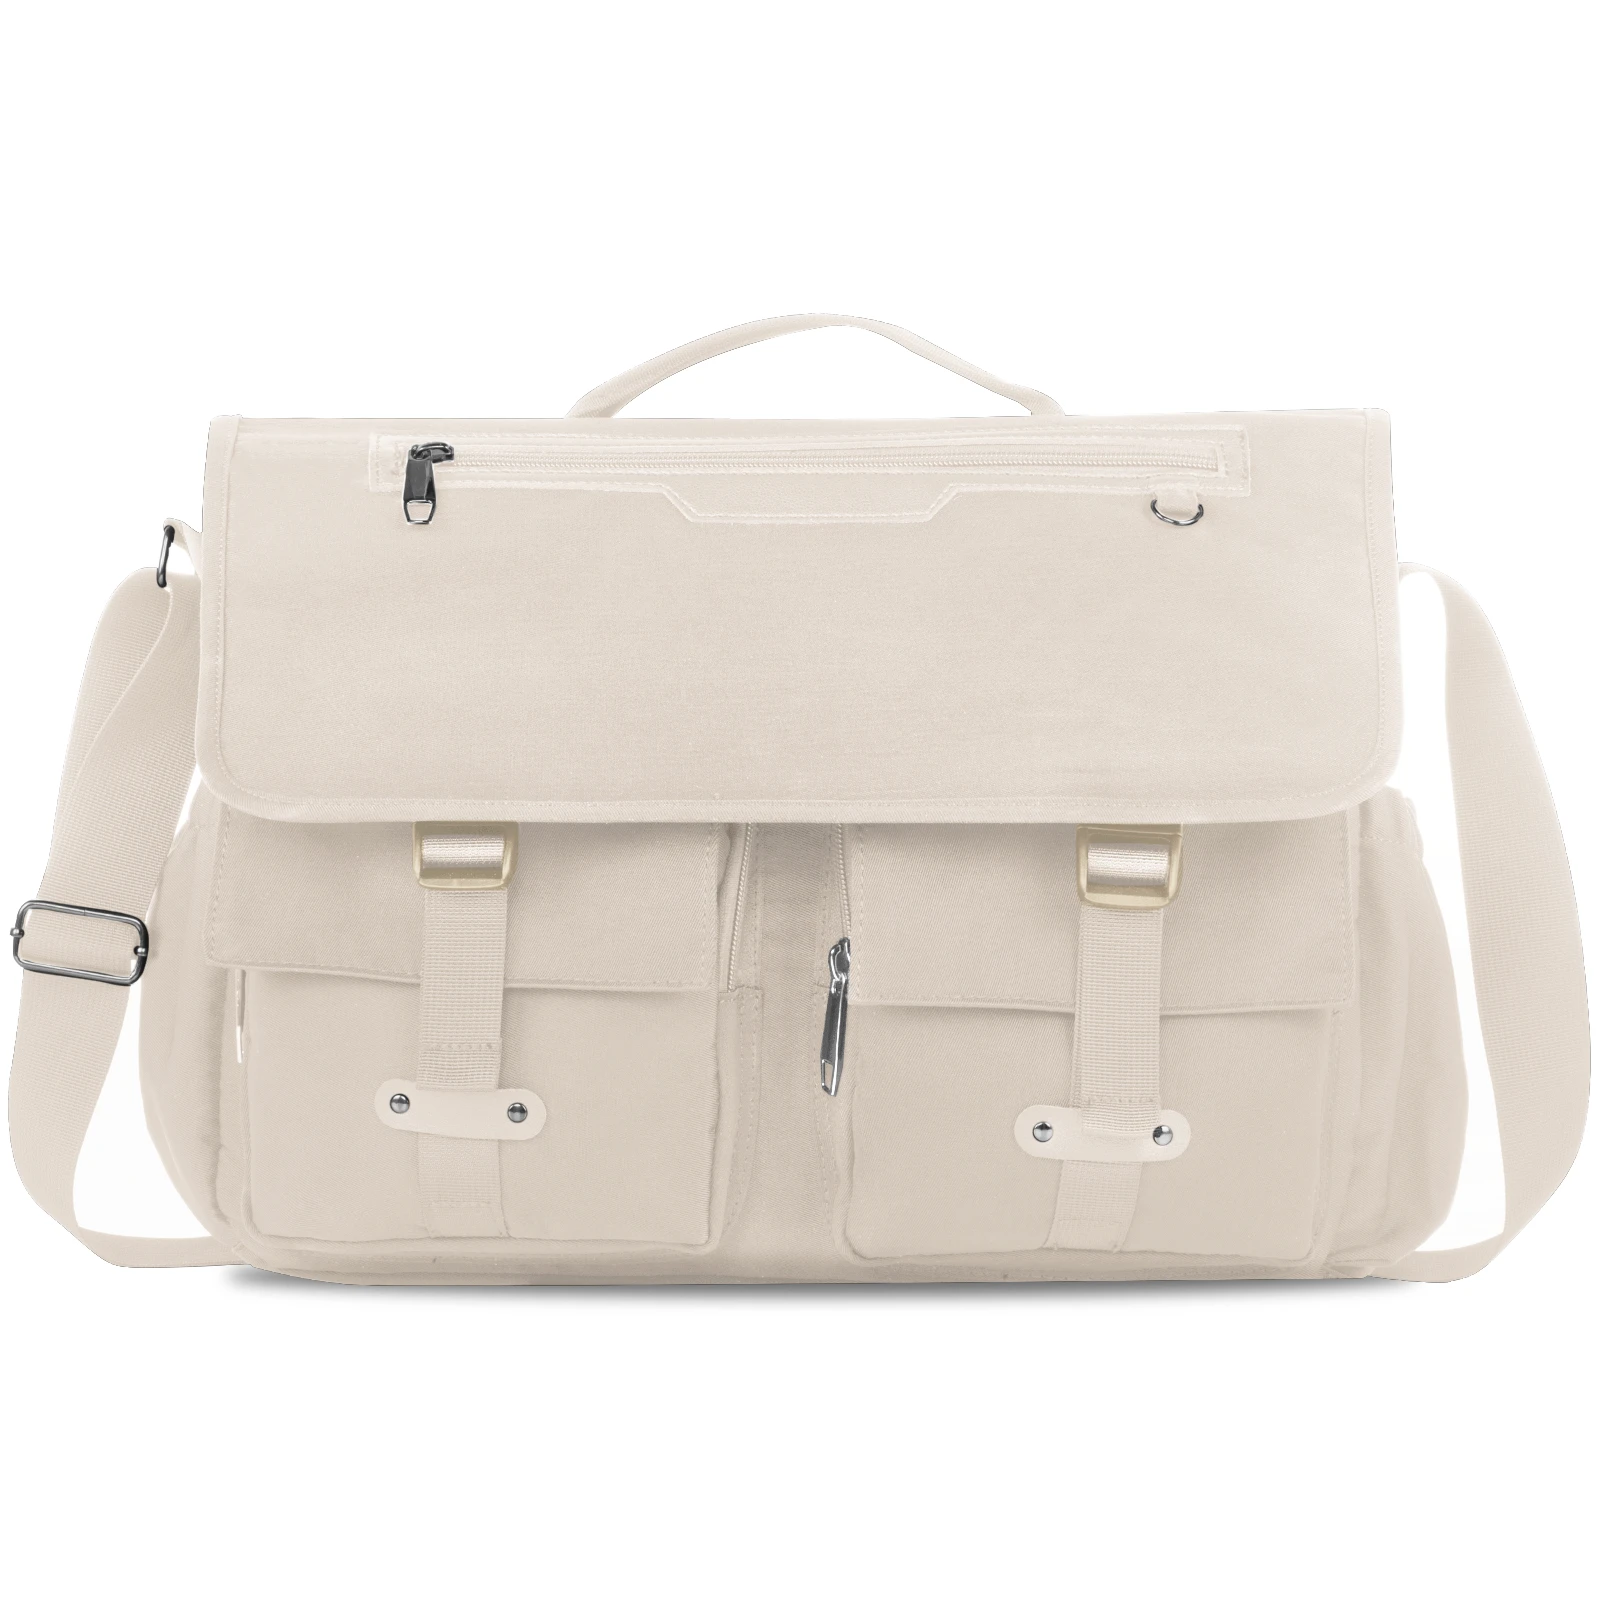 High Quality Messenger Bag Waterproof High Capacity Travel Outside Sport... - $101.94